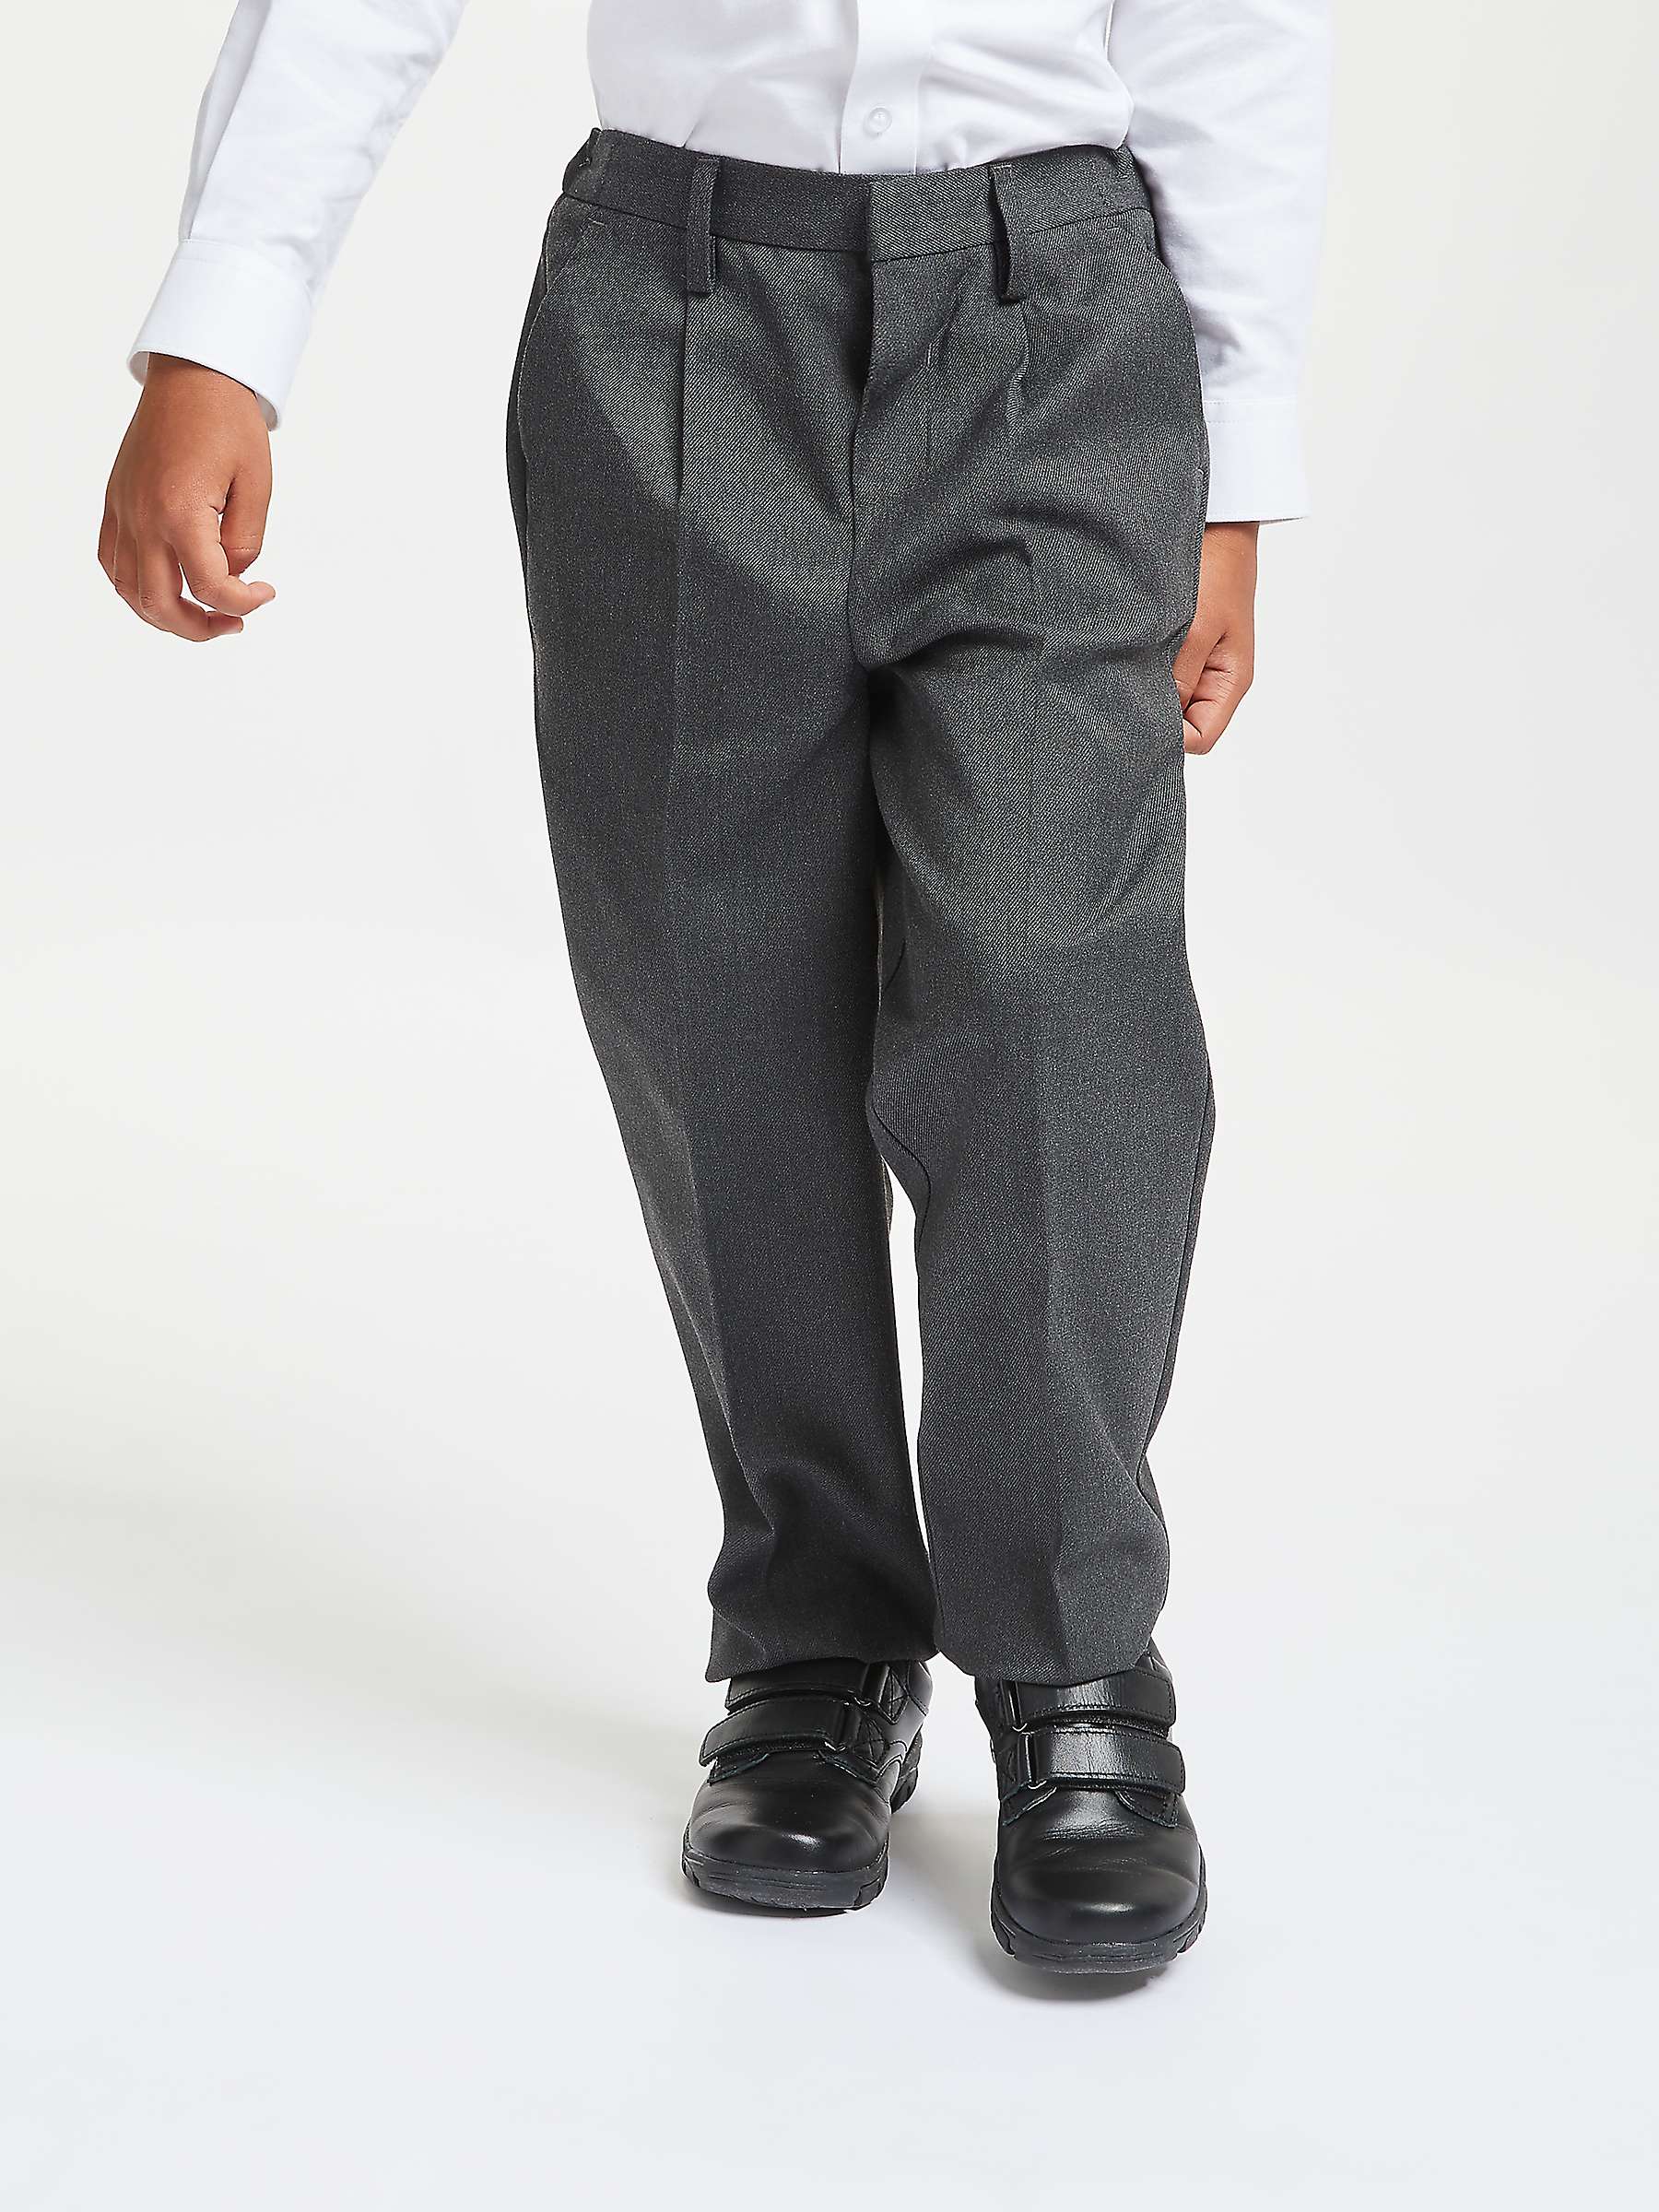 Buy John Lewis Boys' Adjustable Waist Generous Fit Stain Resistant School Trousers Online at johnlewis.com